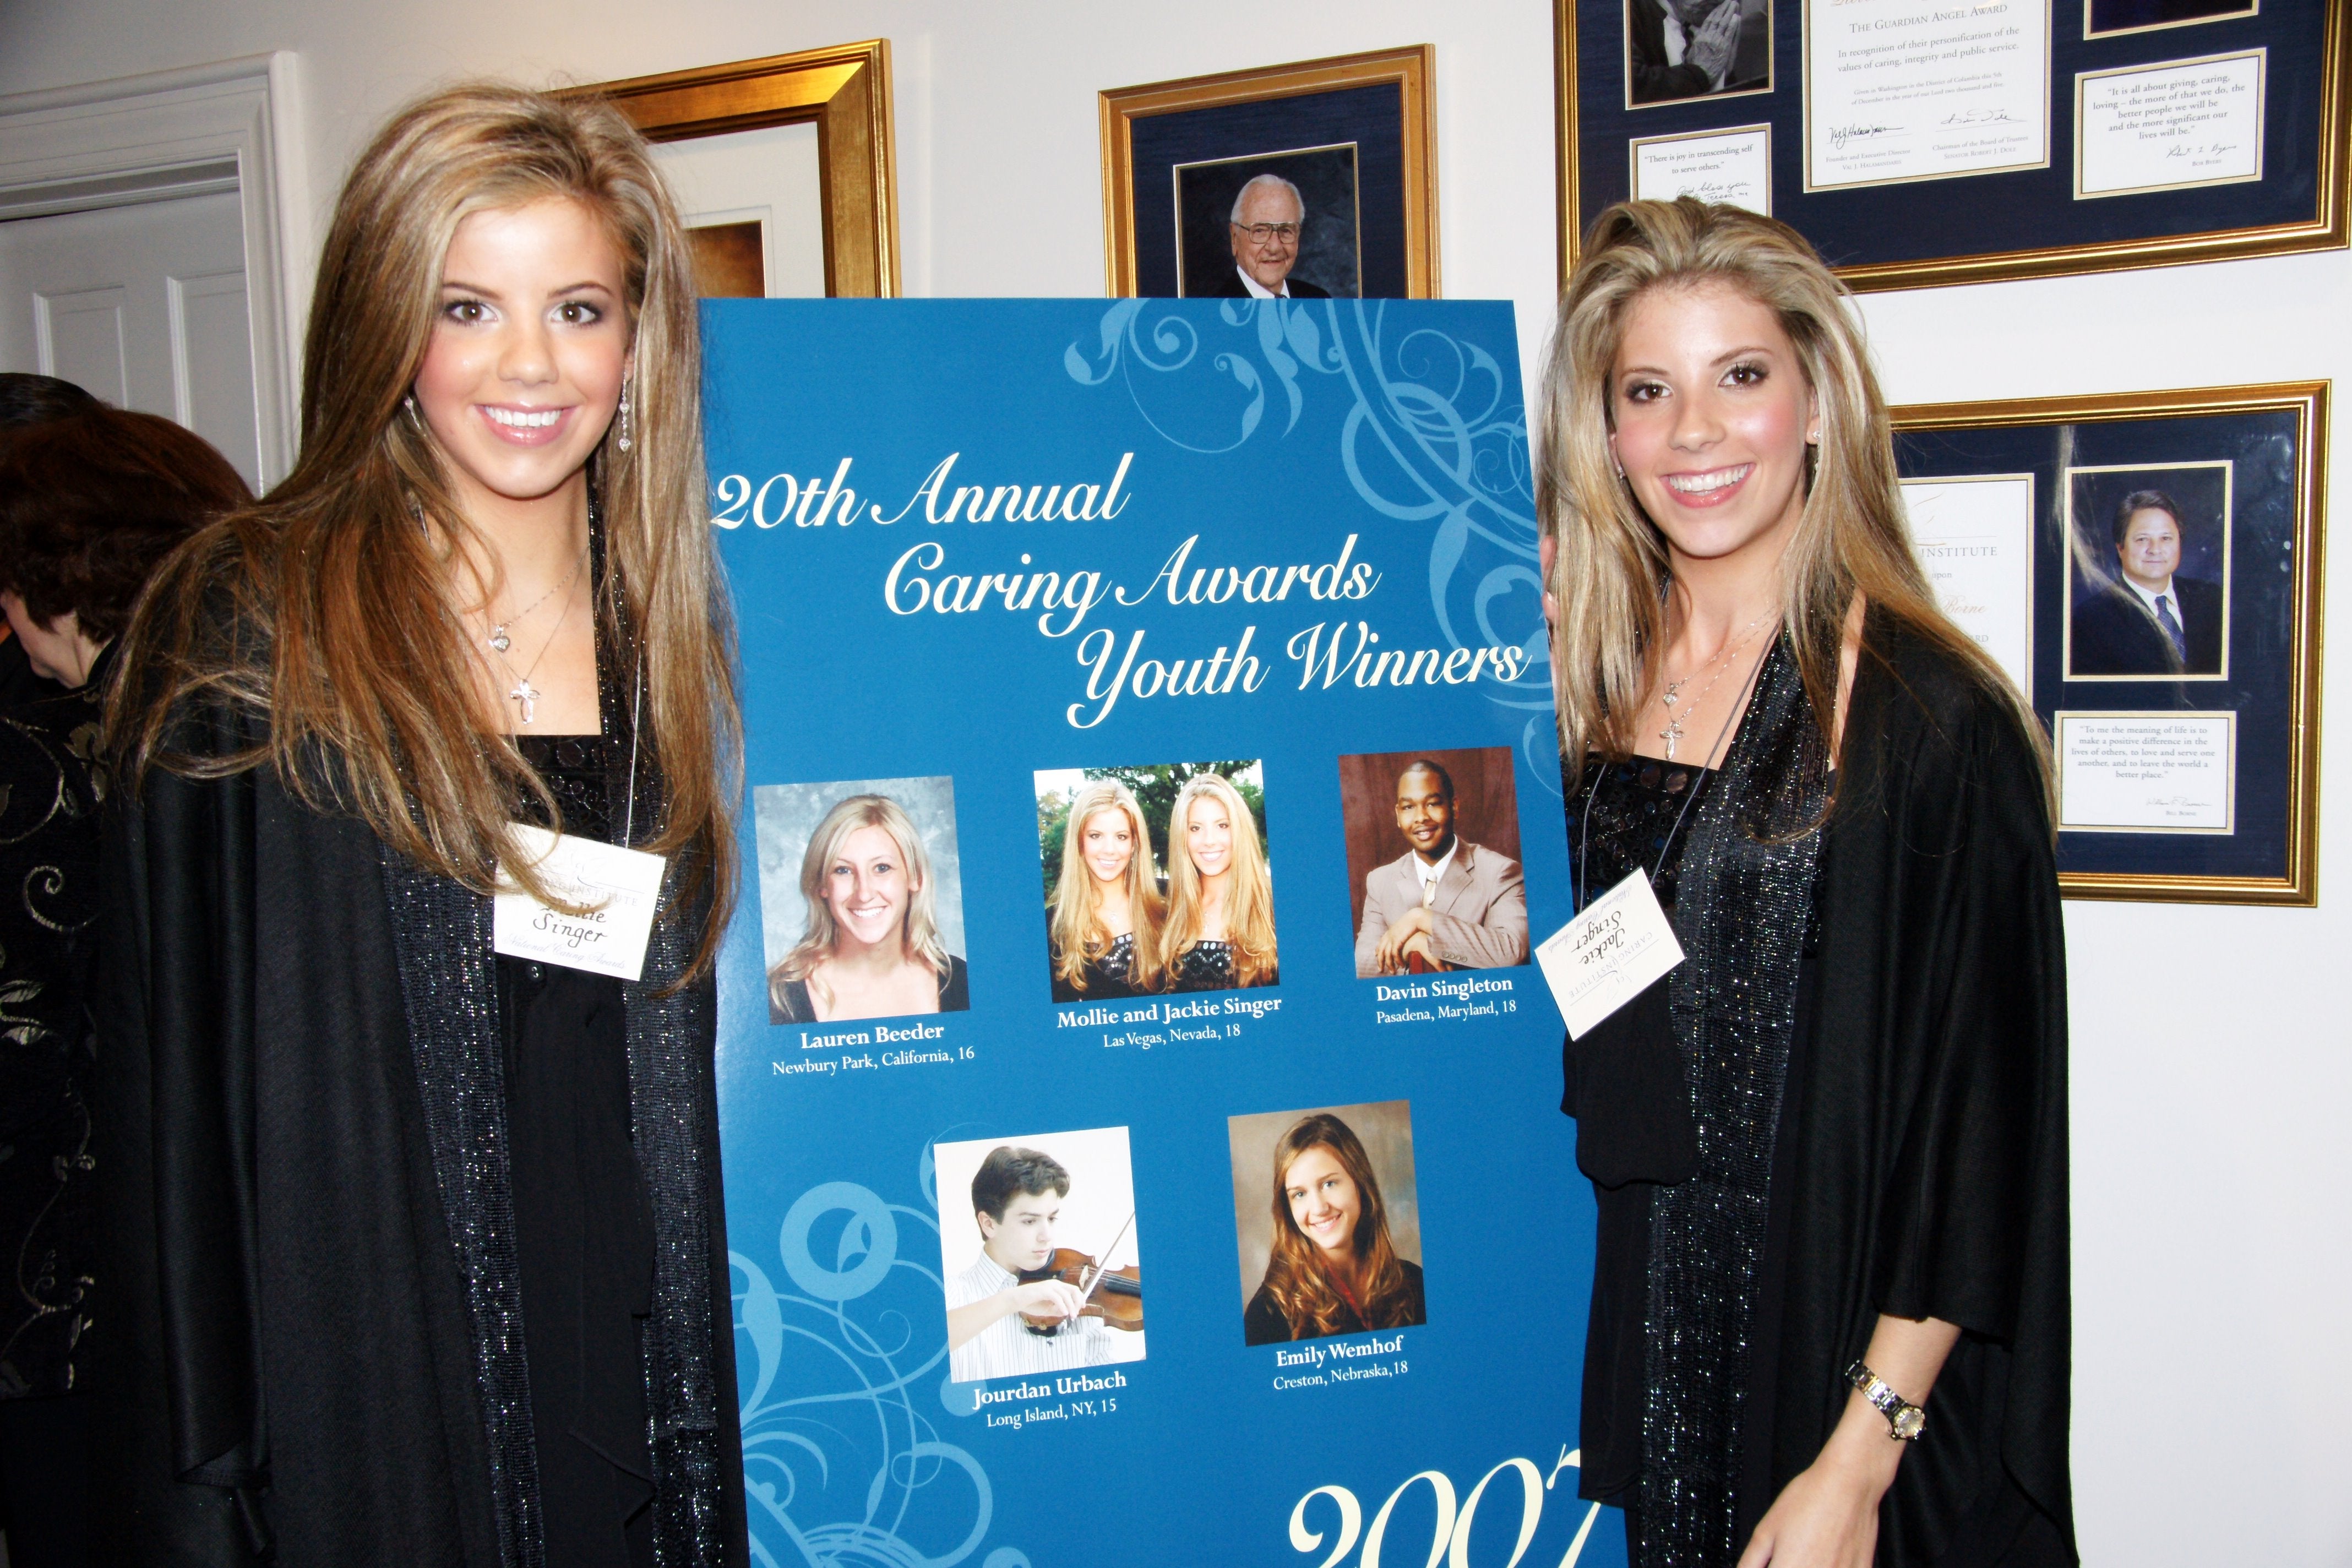 The 2007 Caring Awards